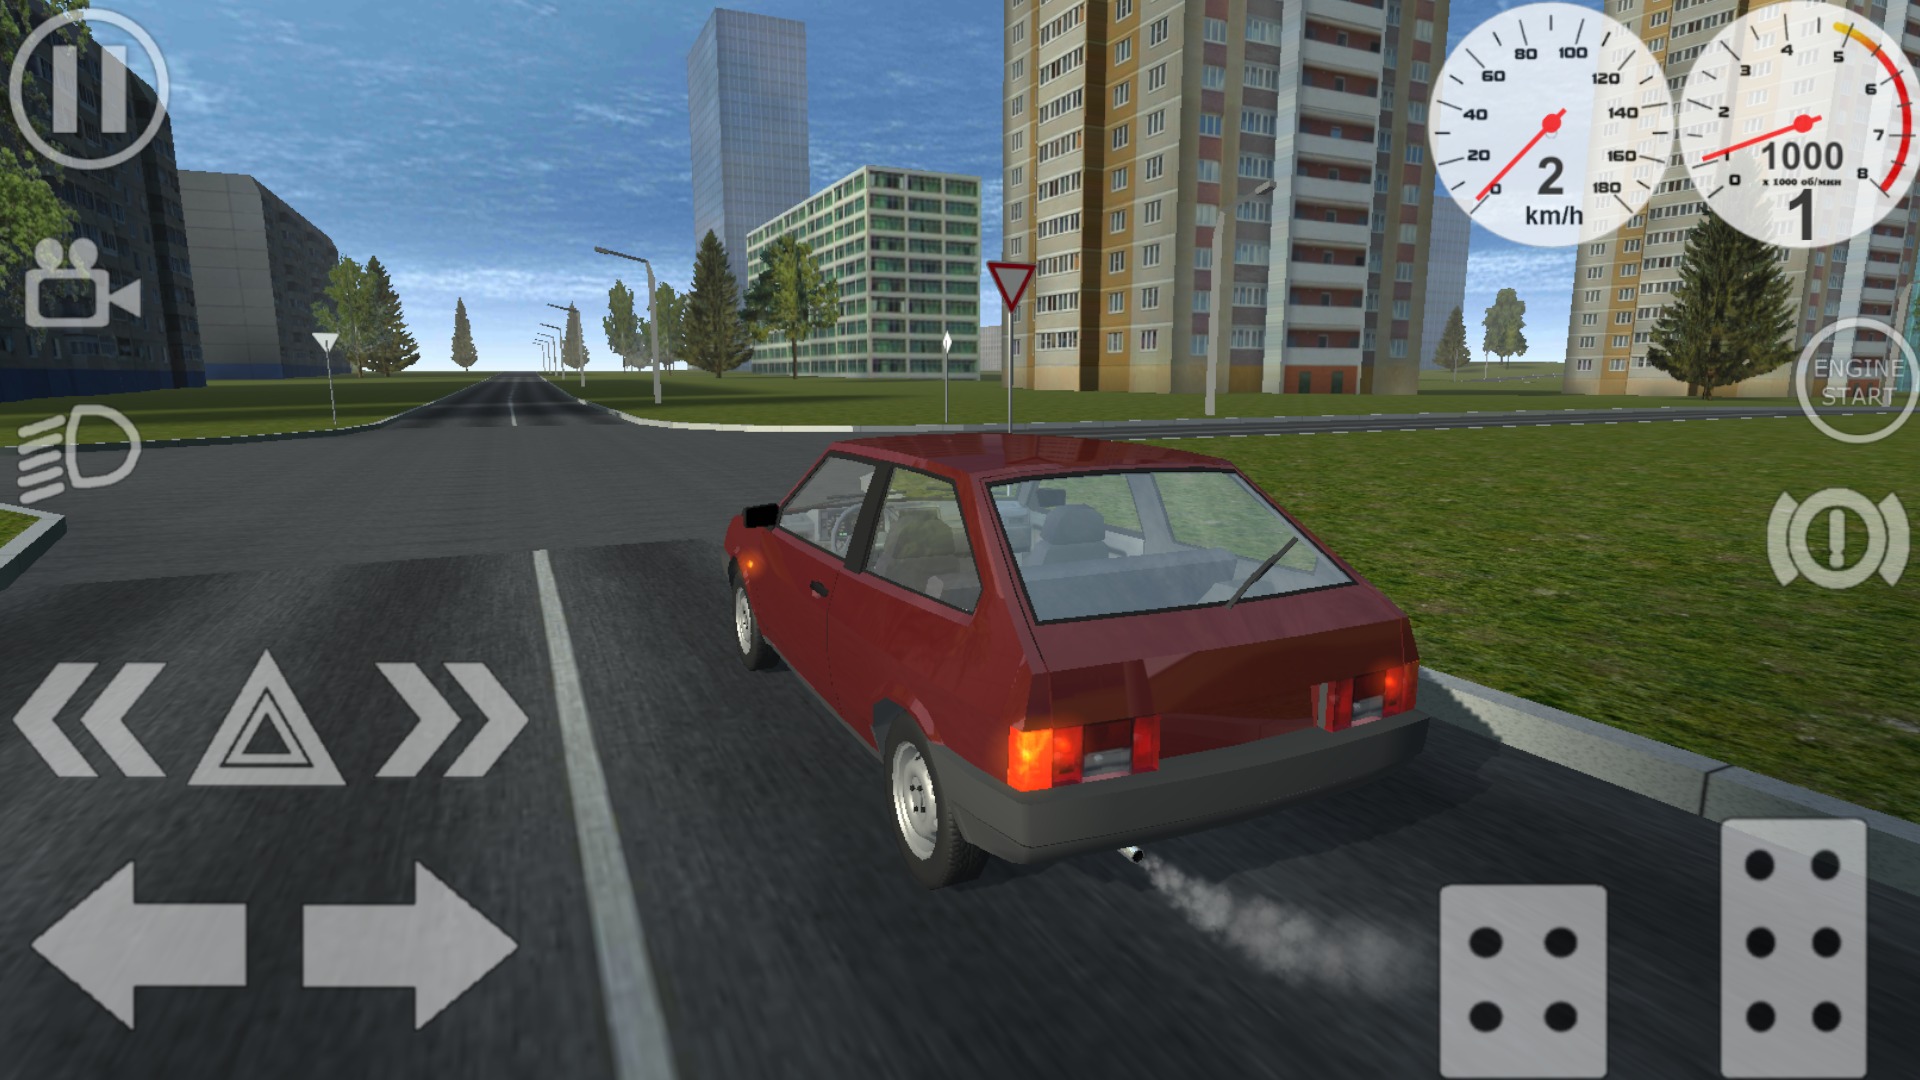 Car crash physics sim моды. Симпл кар краш симулятор. Simple car crash physics Simulator. Simple car crash моды. Мод на игру simple car crash.